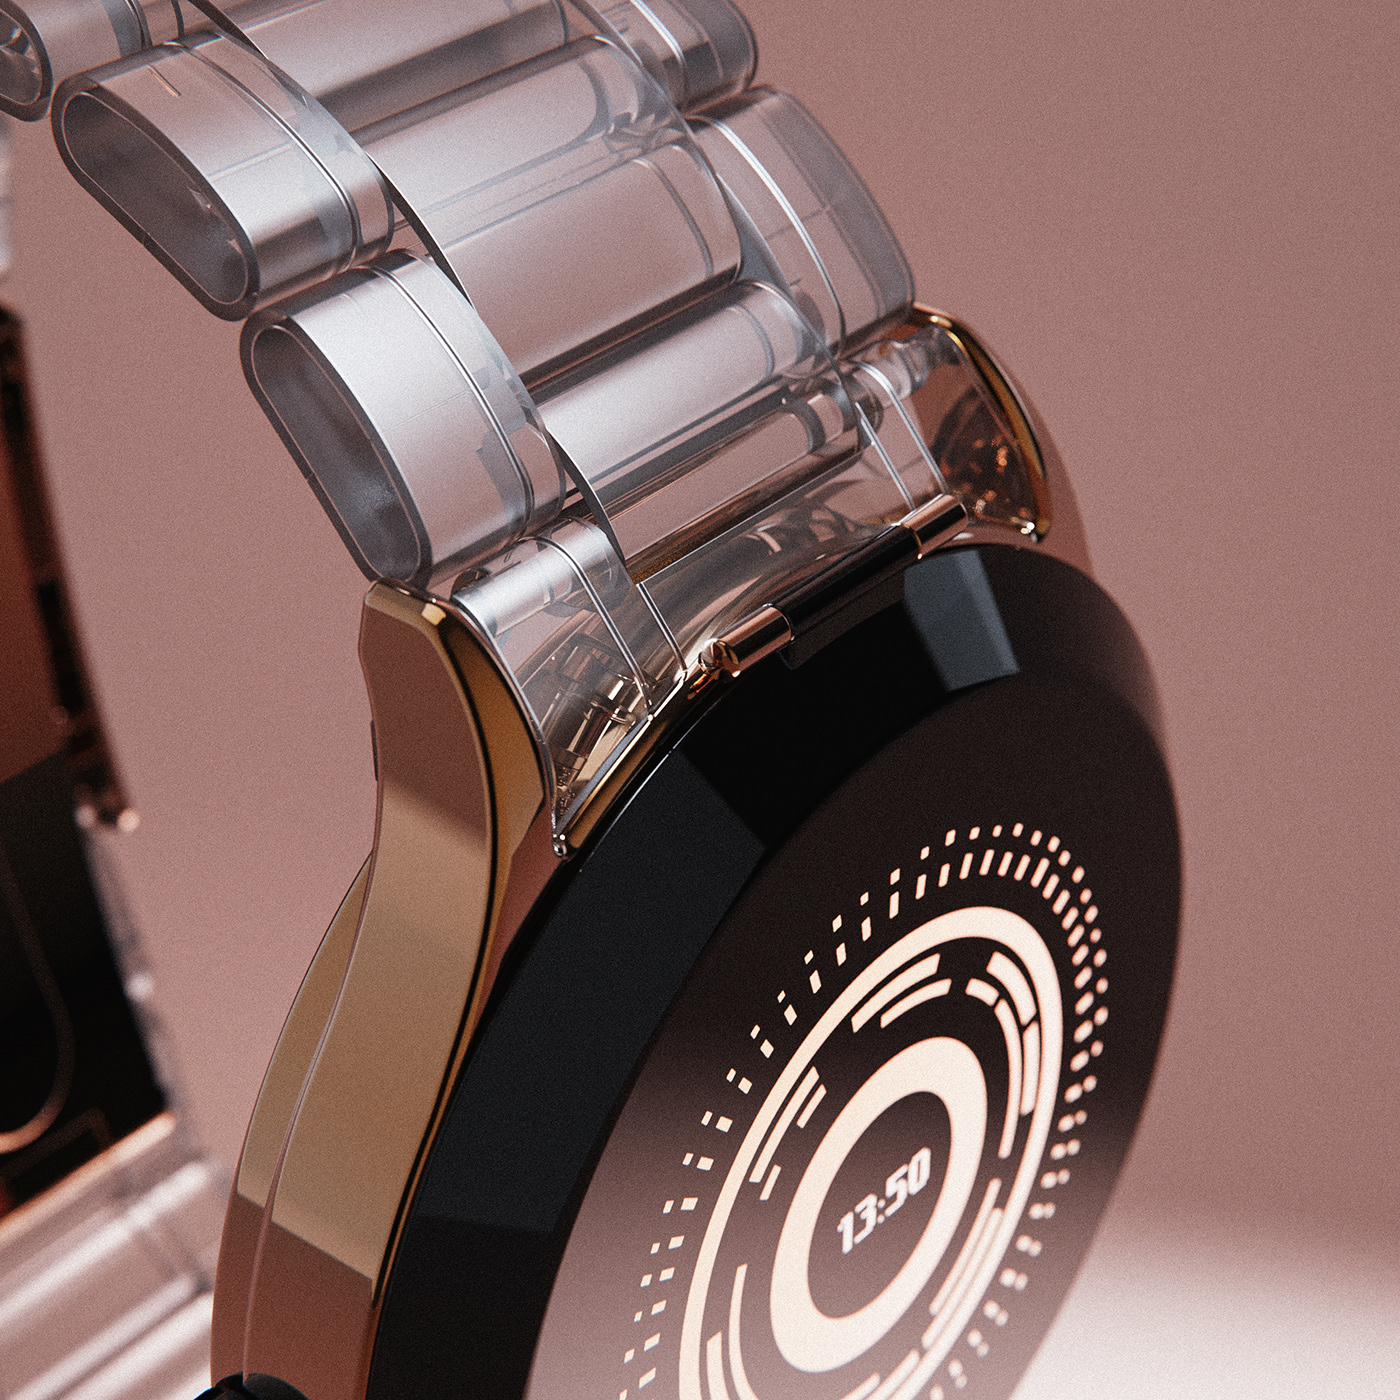 yankodesign challenge watch wristwatch productvisualization reloj time fusionchrono retrofuturistic Watch concept